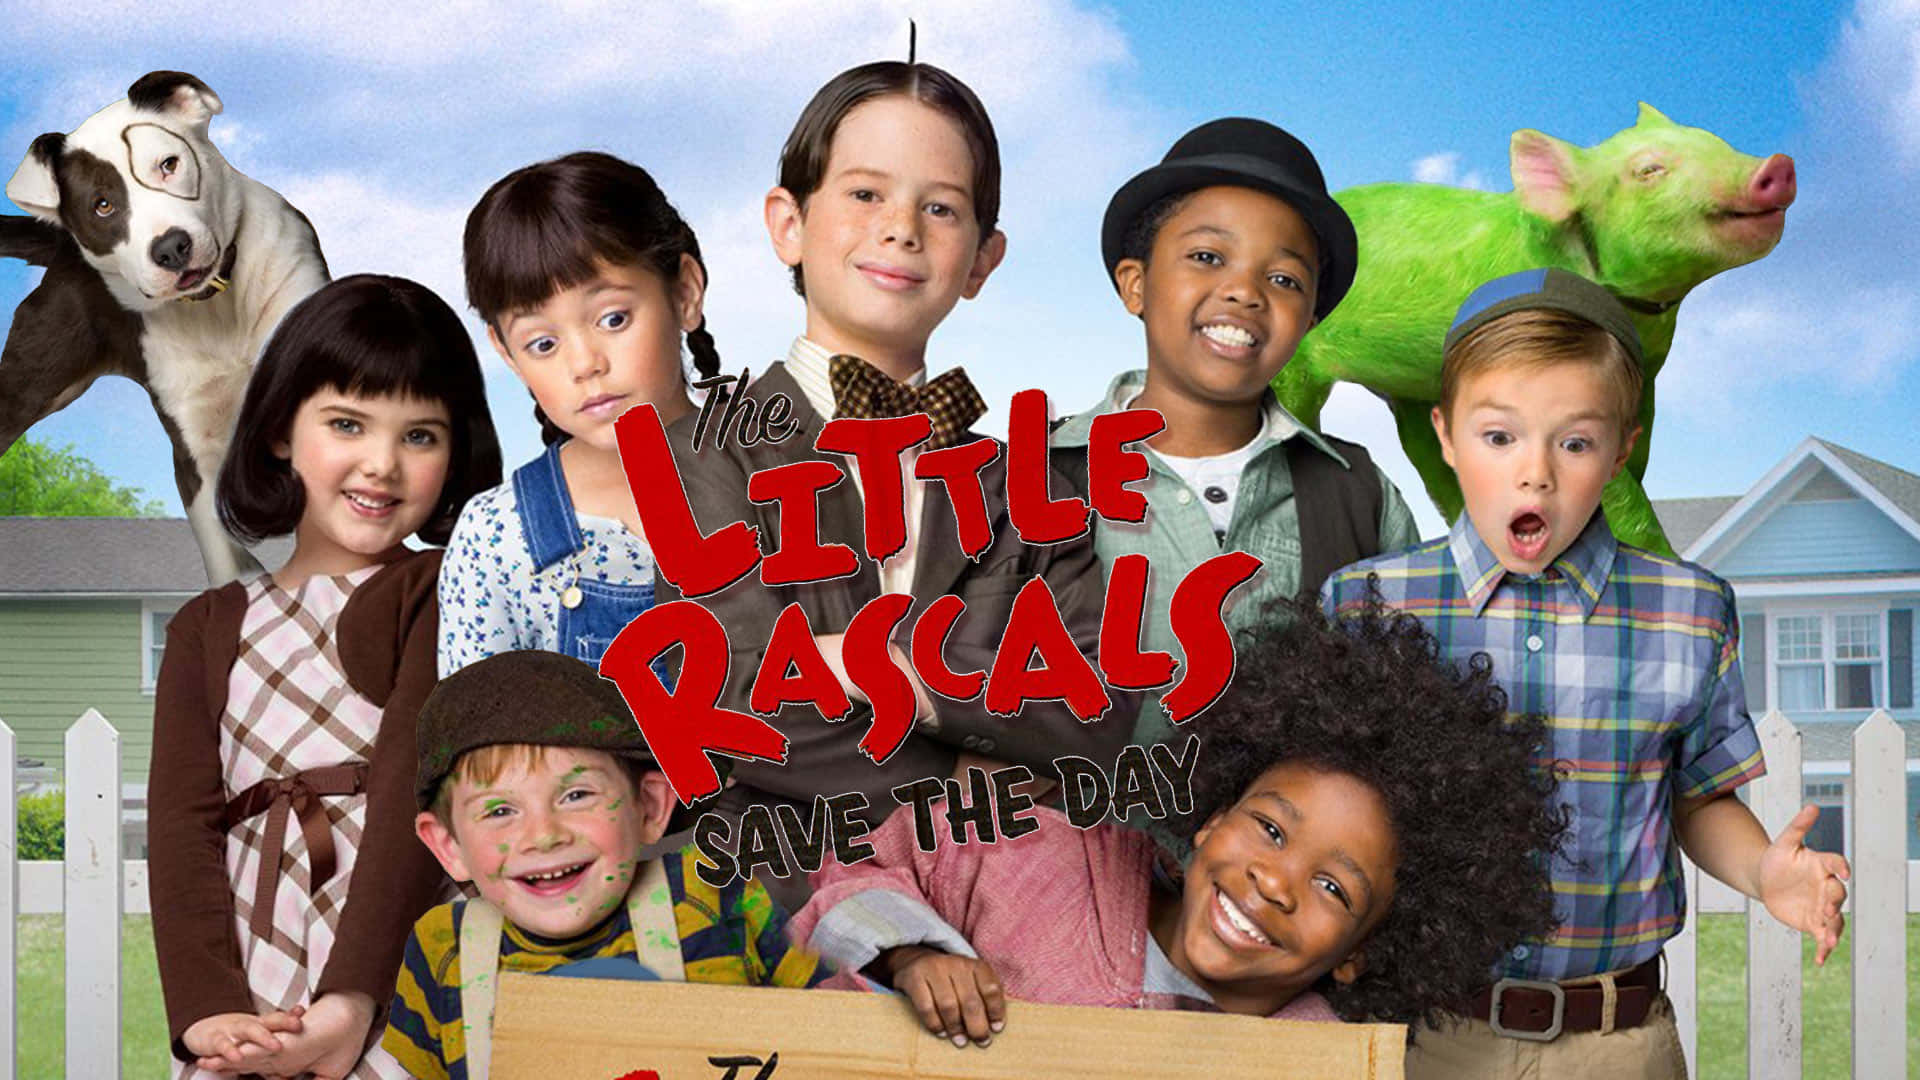 the little rascals 1994 spanky